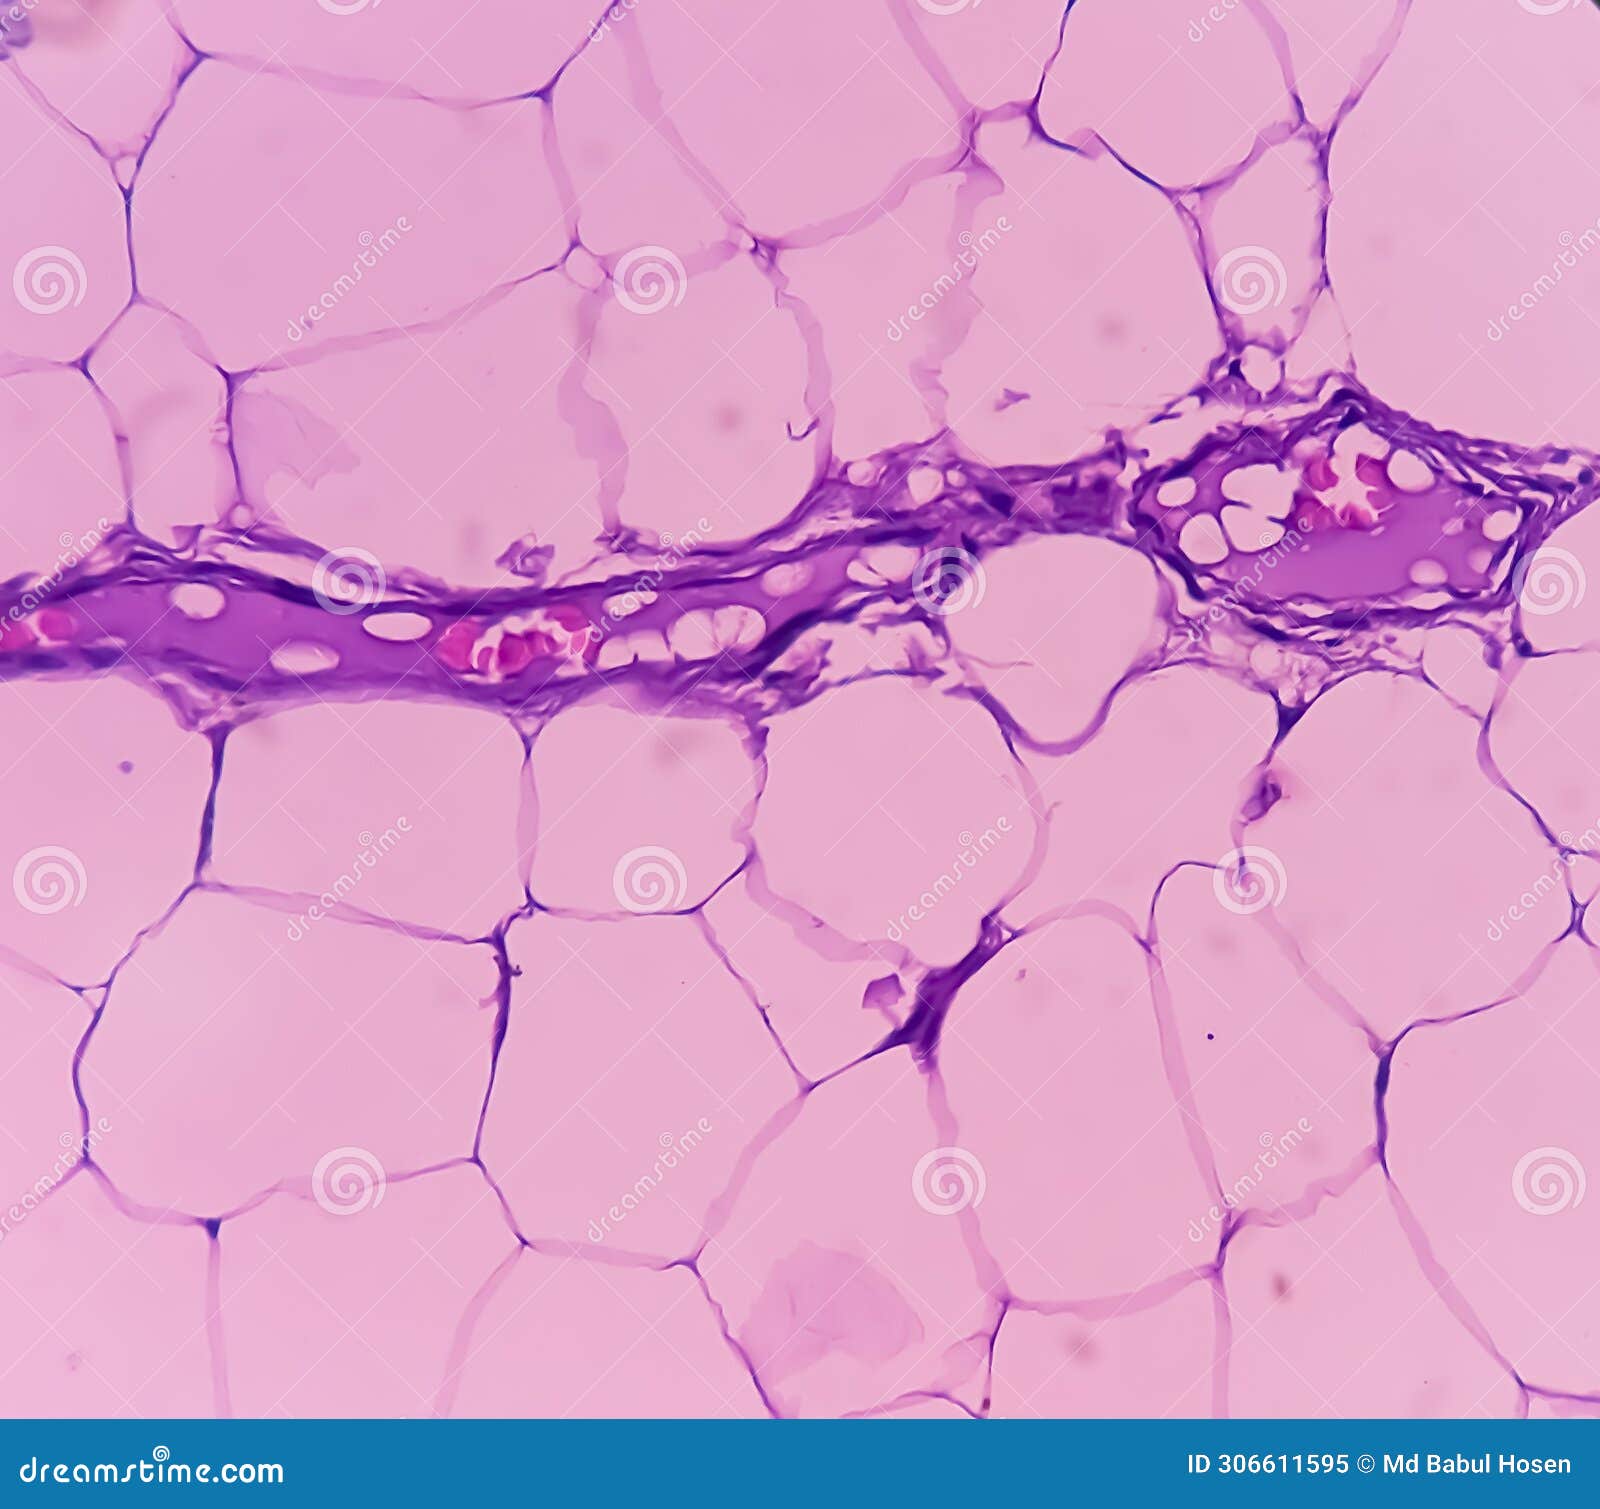 lipoma on cubital fossa, benign growth of fatty tissue, benign neoplasm, adipocytes, partially capsulated tumor, 40x microscopic v